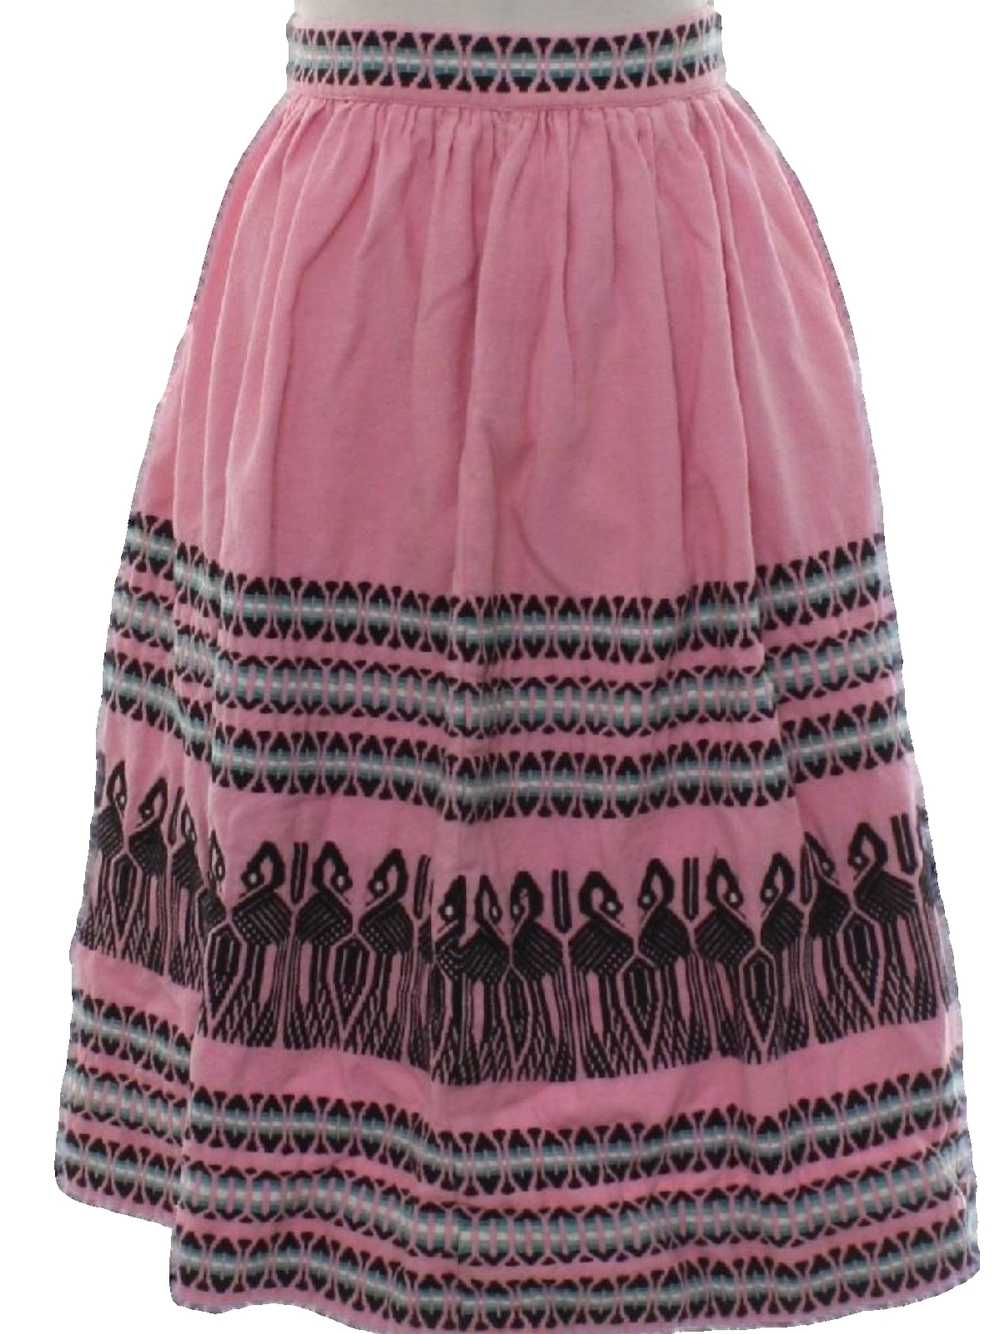 1950's Circle Skirt - image 1